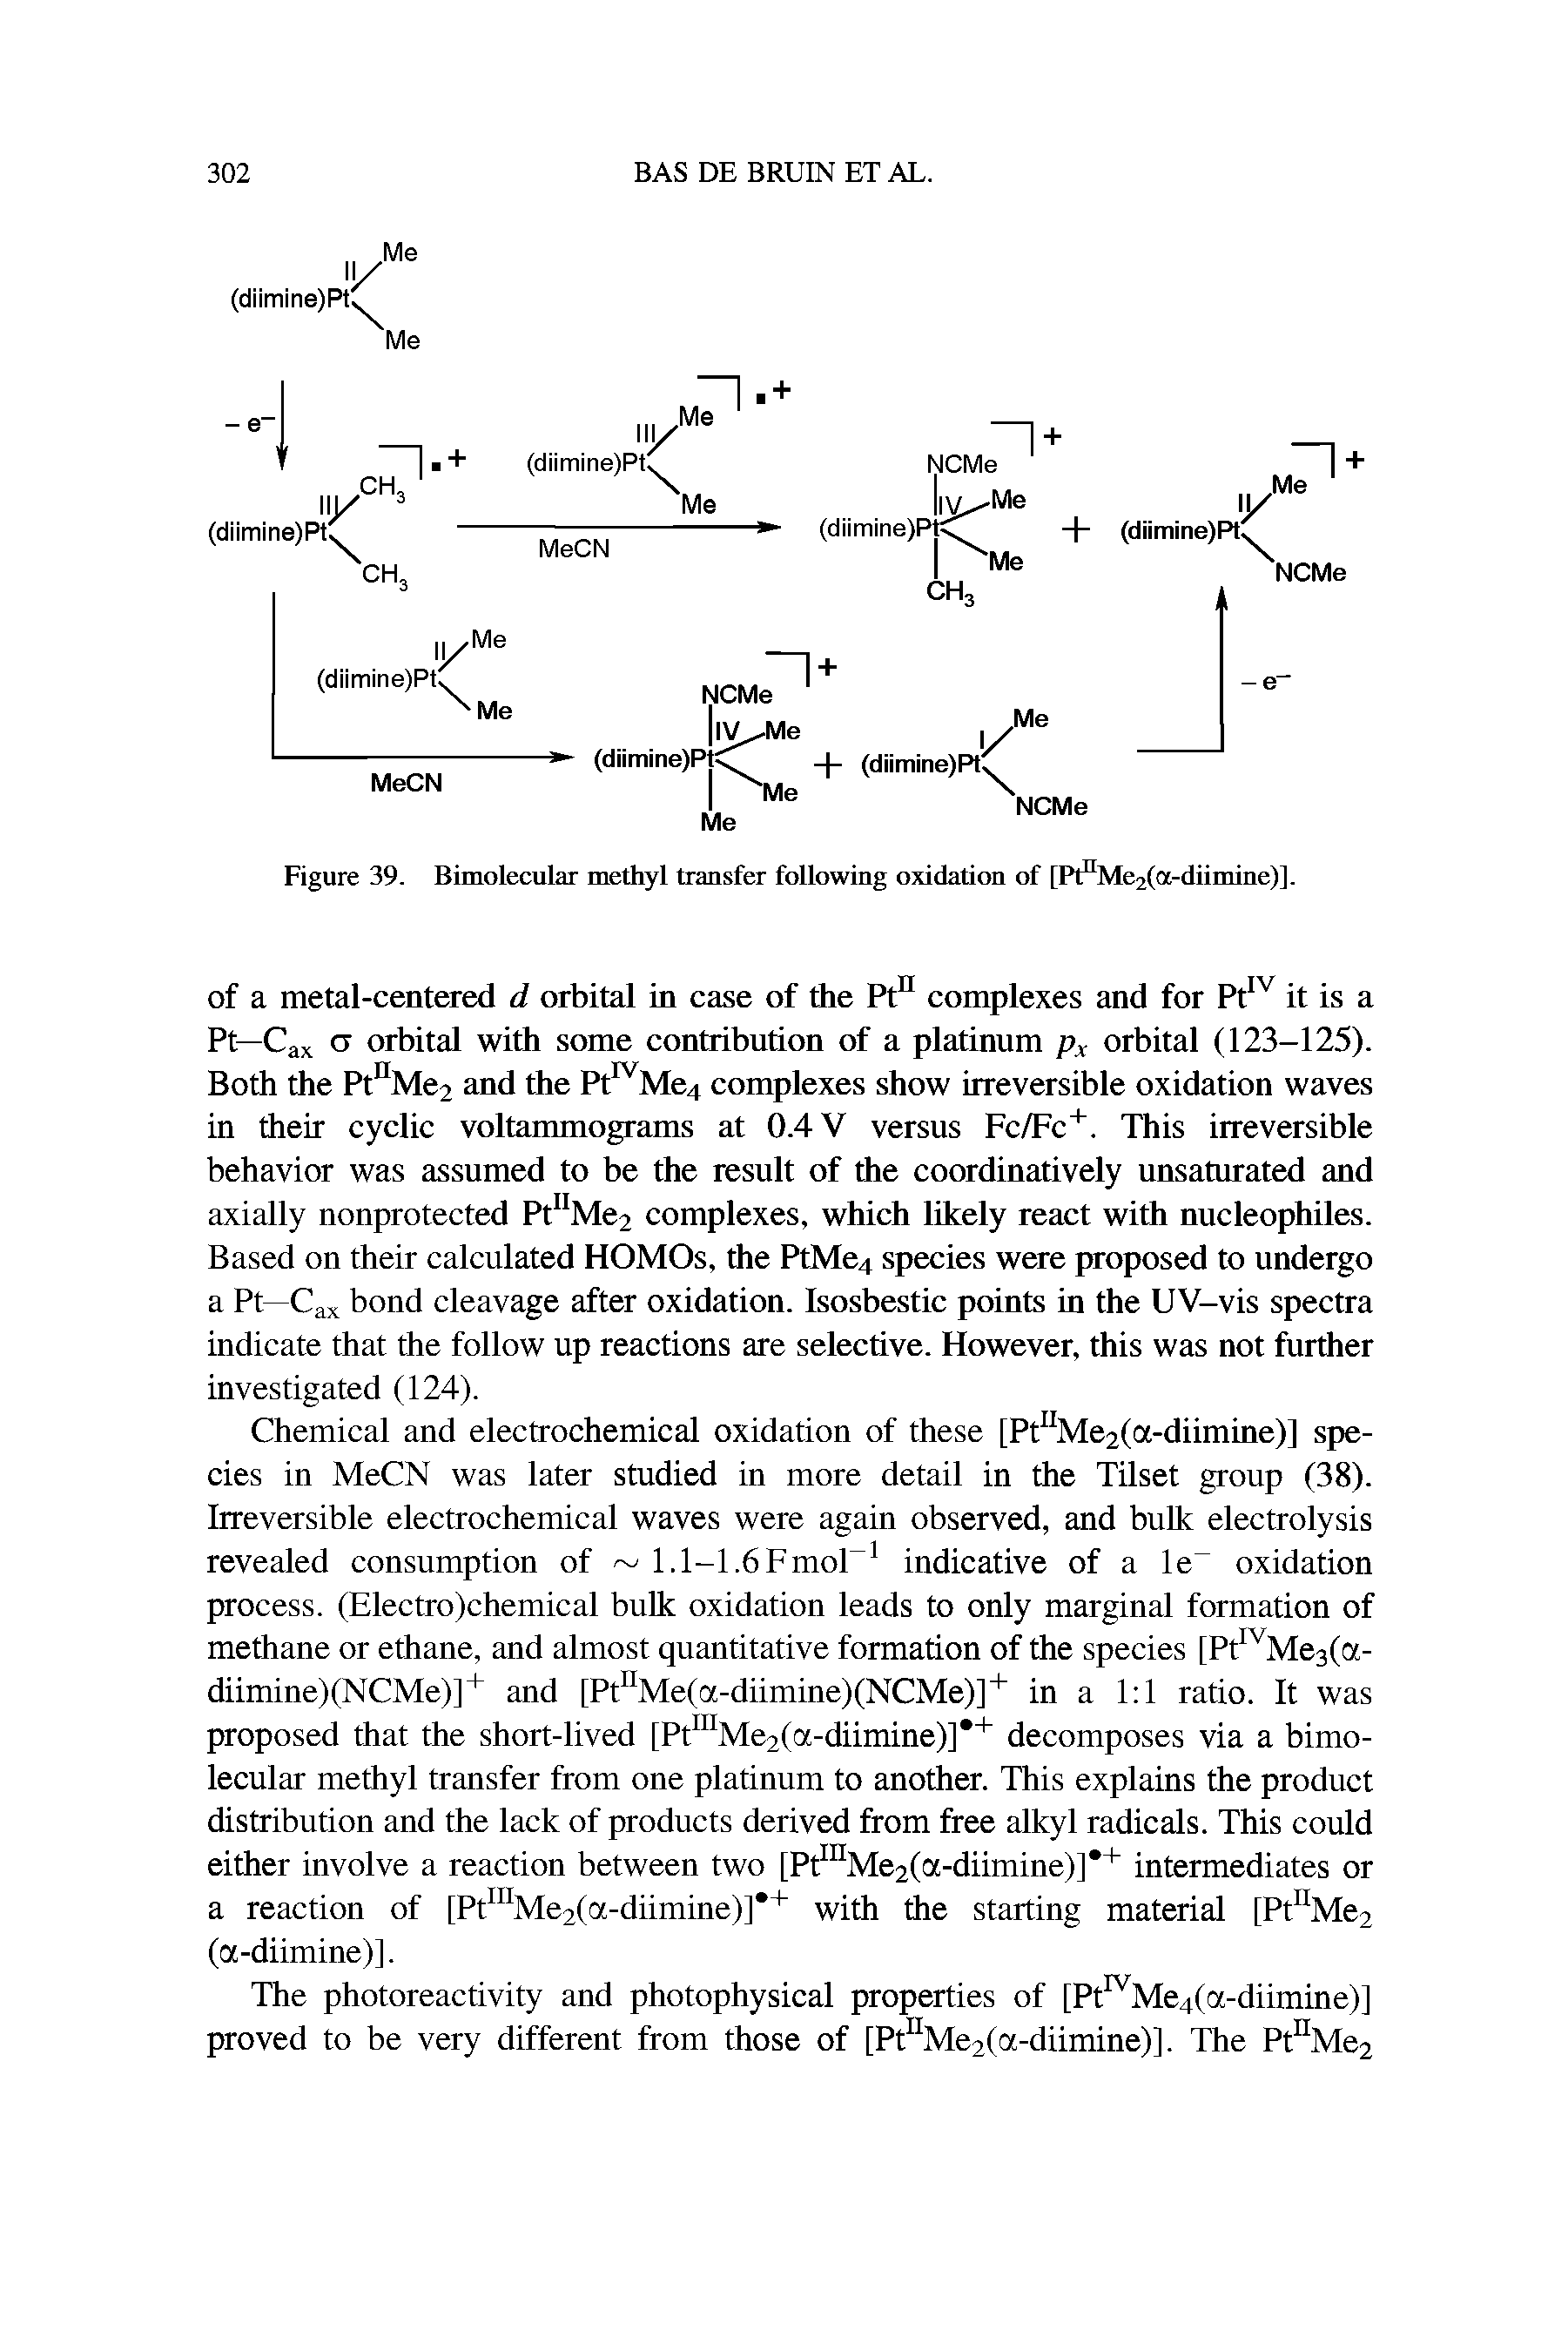 Figure 39. Bimolecular methyl transfer following oxidation of [Pt Me2(a-diimine)].